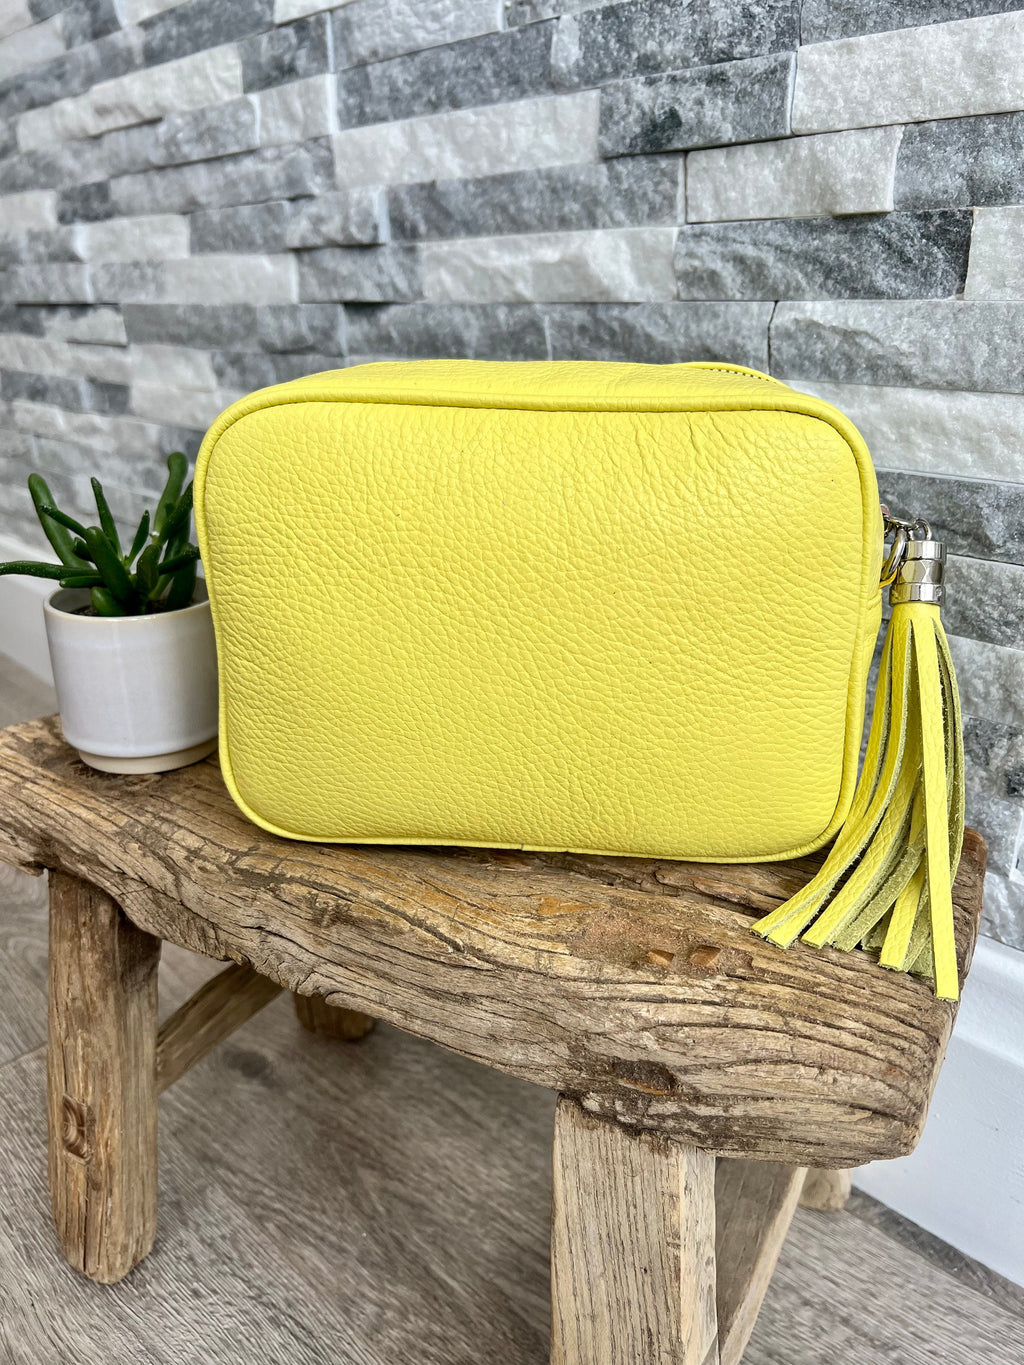 lusciousscarves Handbags Lemon Yellow Leather Camera Style Bag